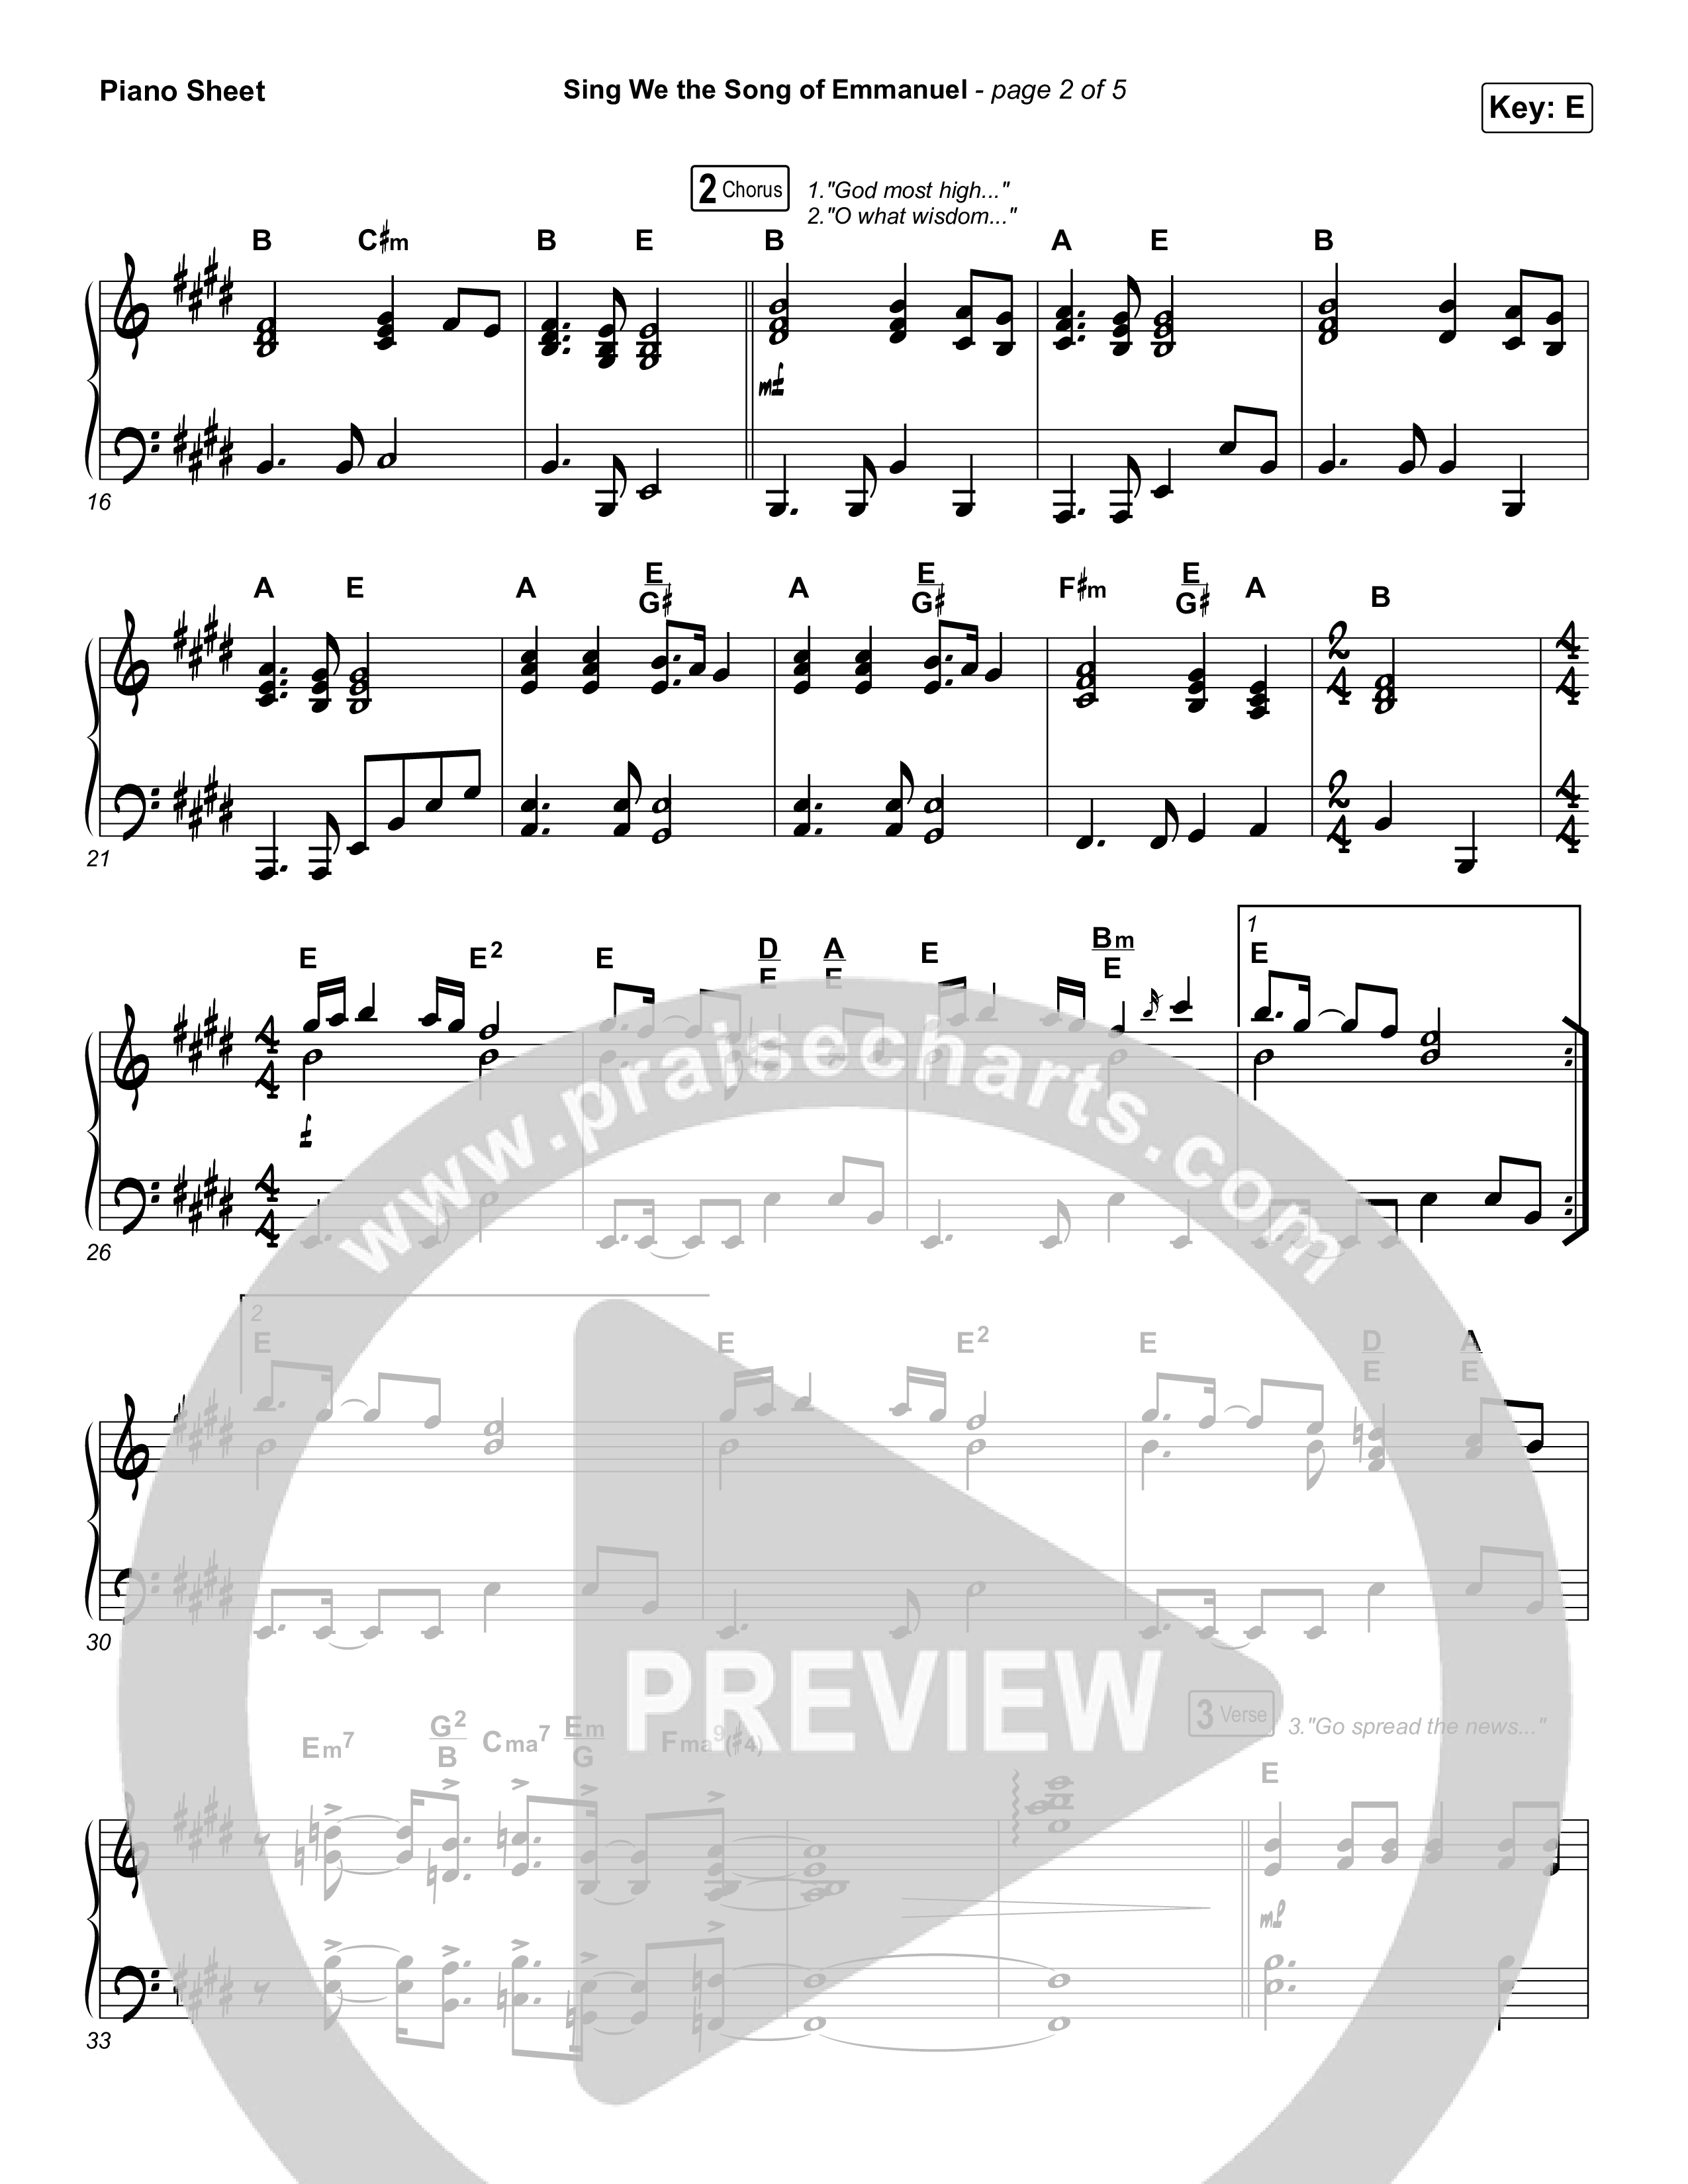 Sing We The Song Of Emmanuel Piano Sheet (Matt Boswell / Matt Papa / Keith & Kristyn Getty)